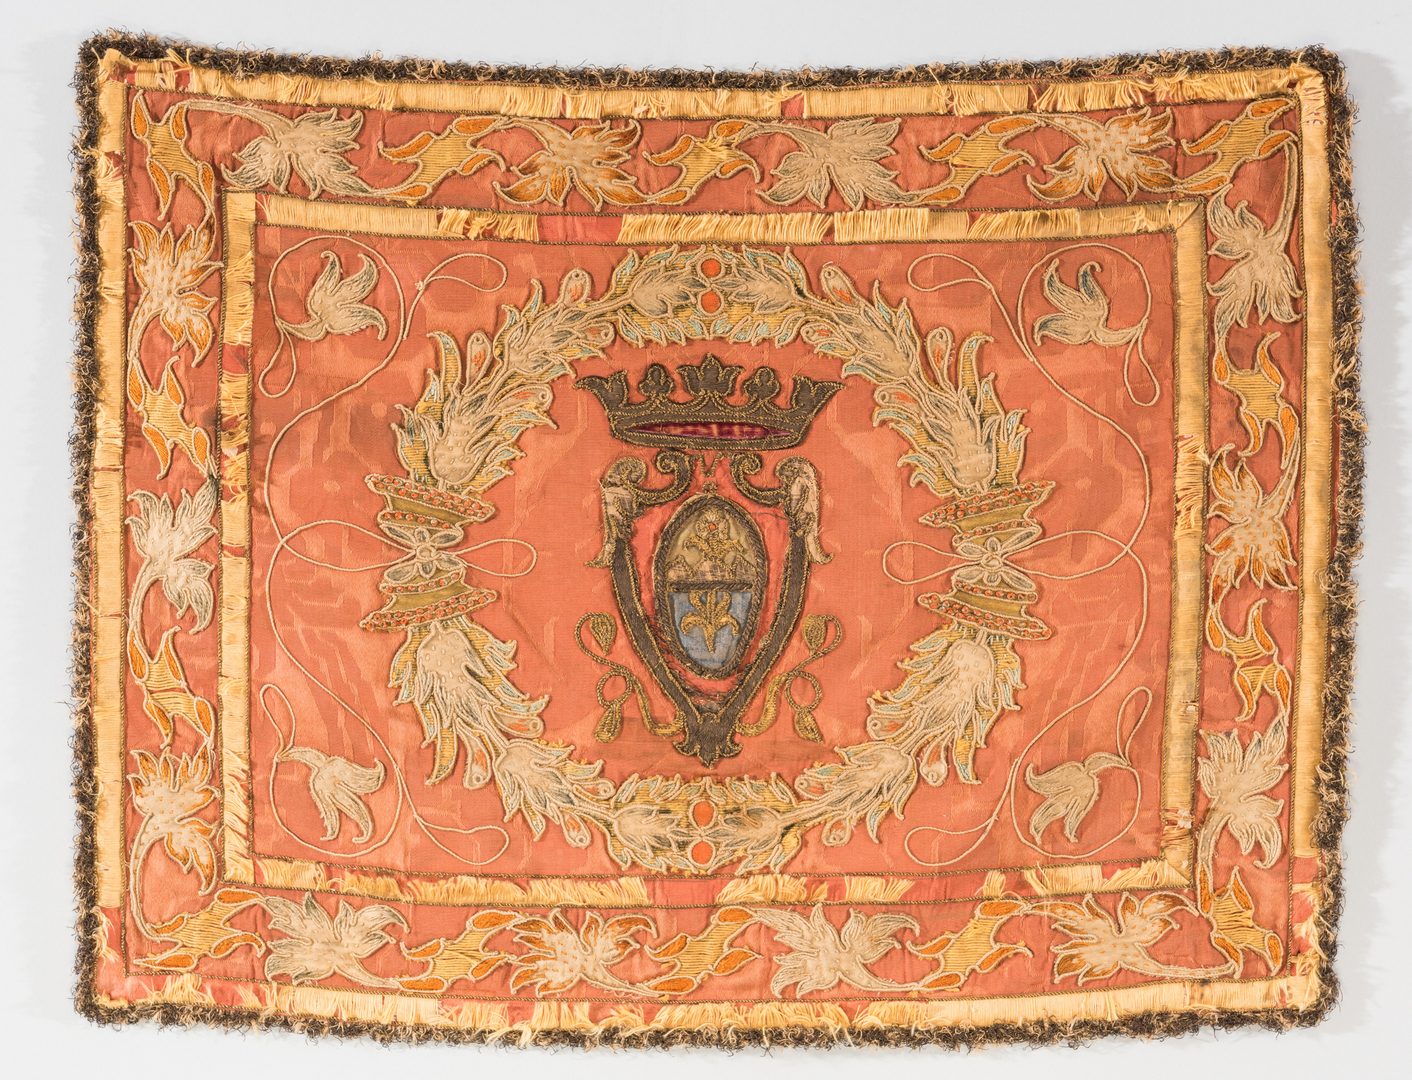 Lot 287: Two Silk Decorative Textiles